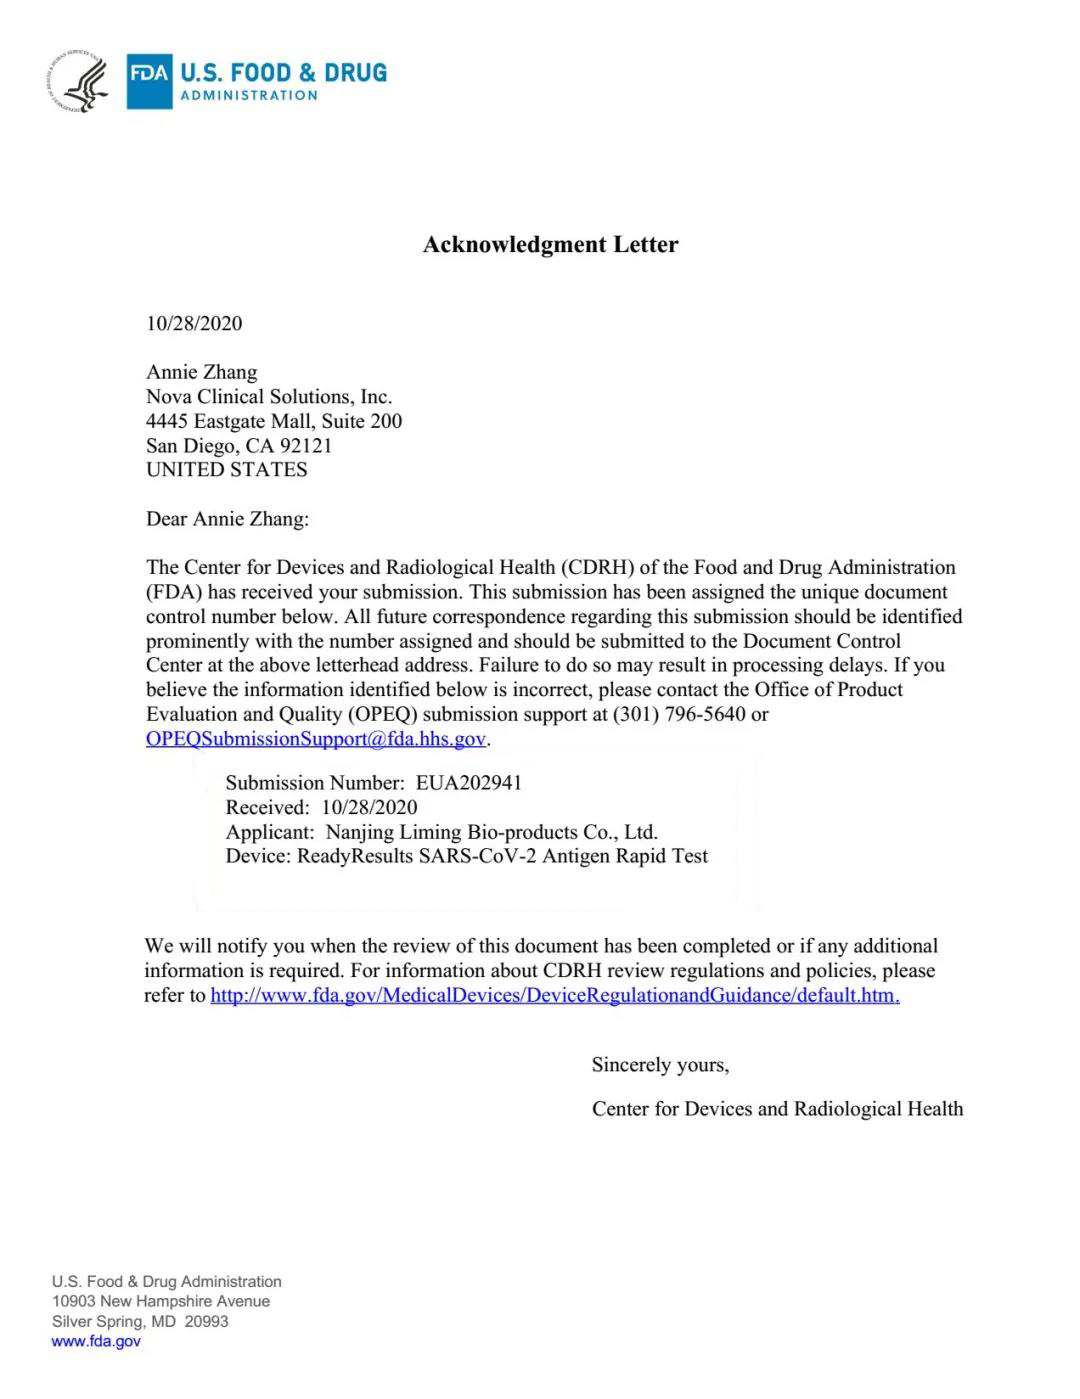 US FDA EUA acceptance letter